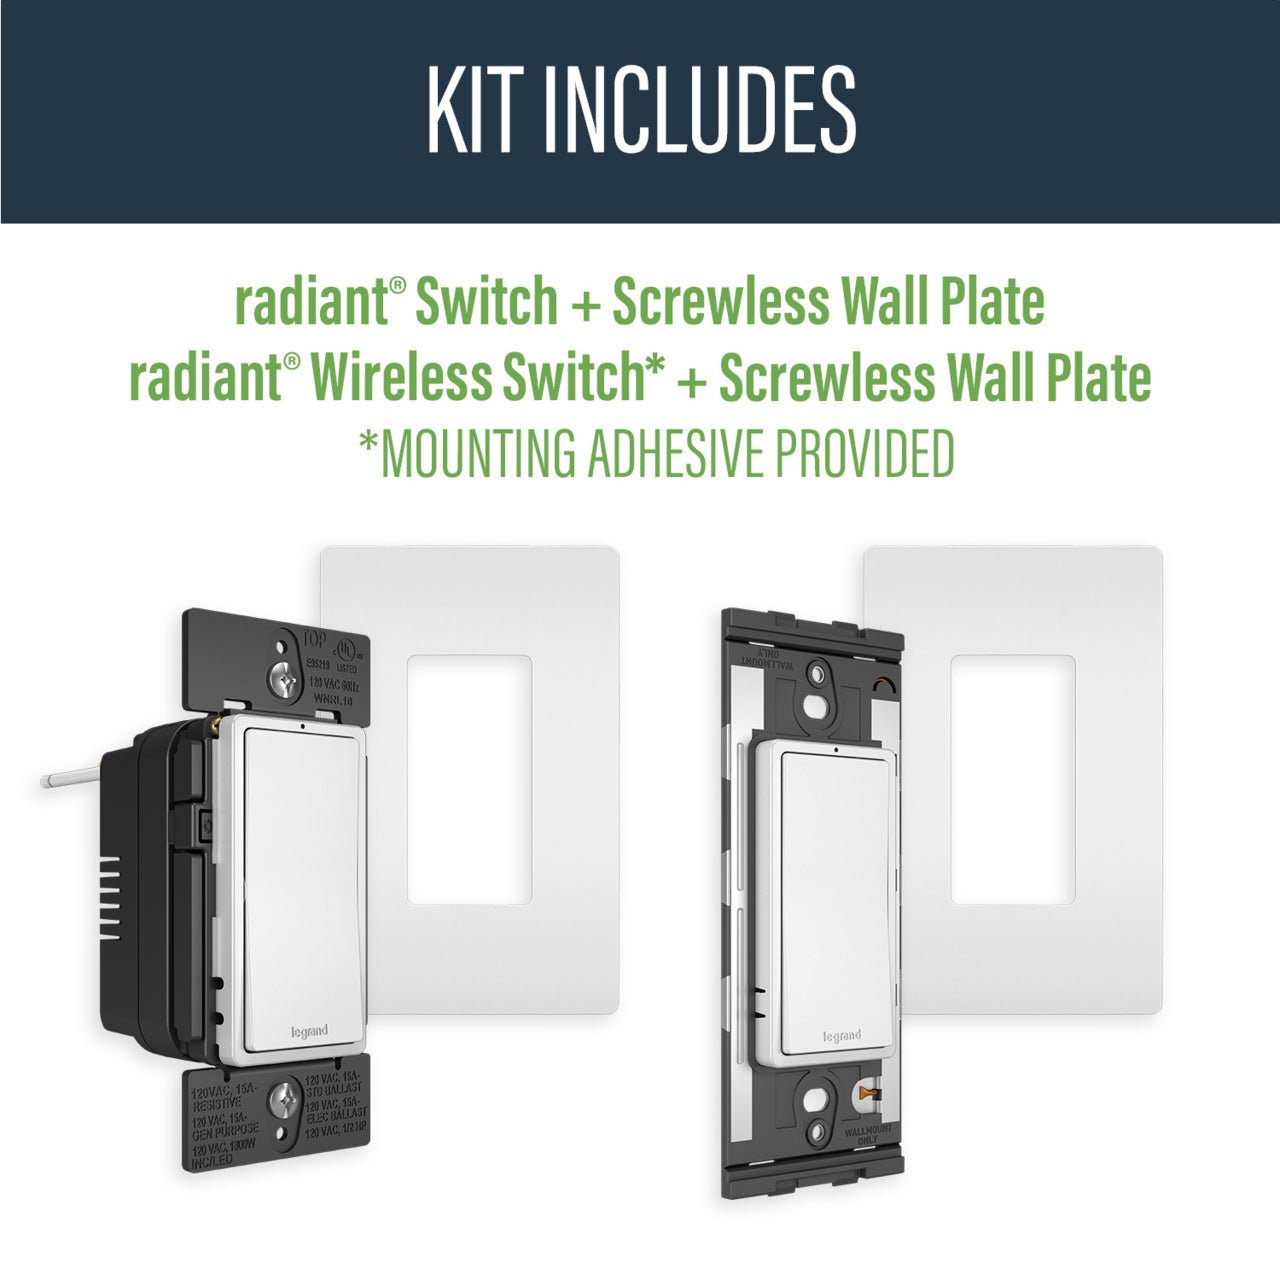 LEG-WNREZK10WHLegrand radiant® Easy 3-Way Switch Kit, White